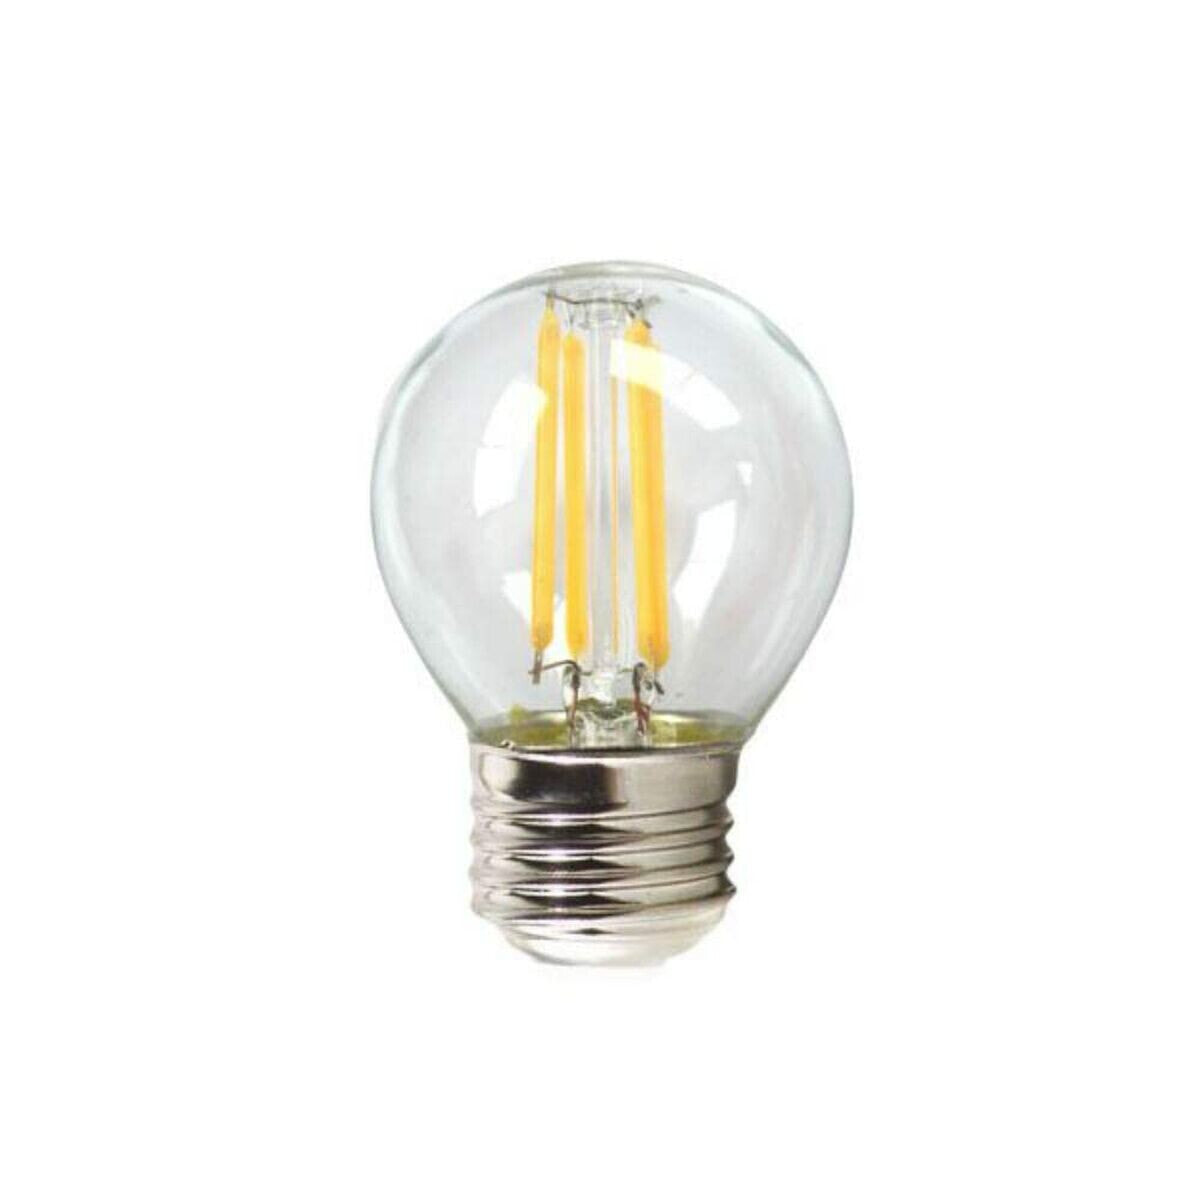 Silver Electronics 961327 energy-saving lamp 4 W E27